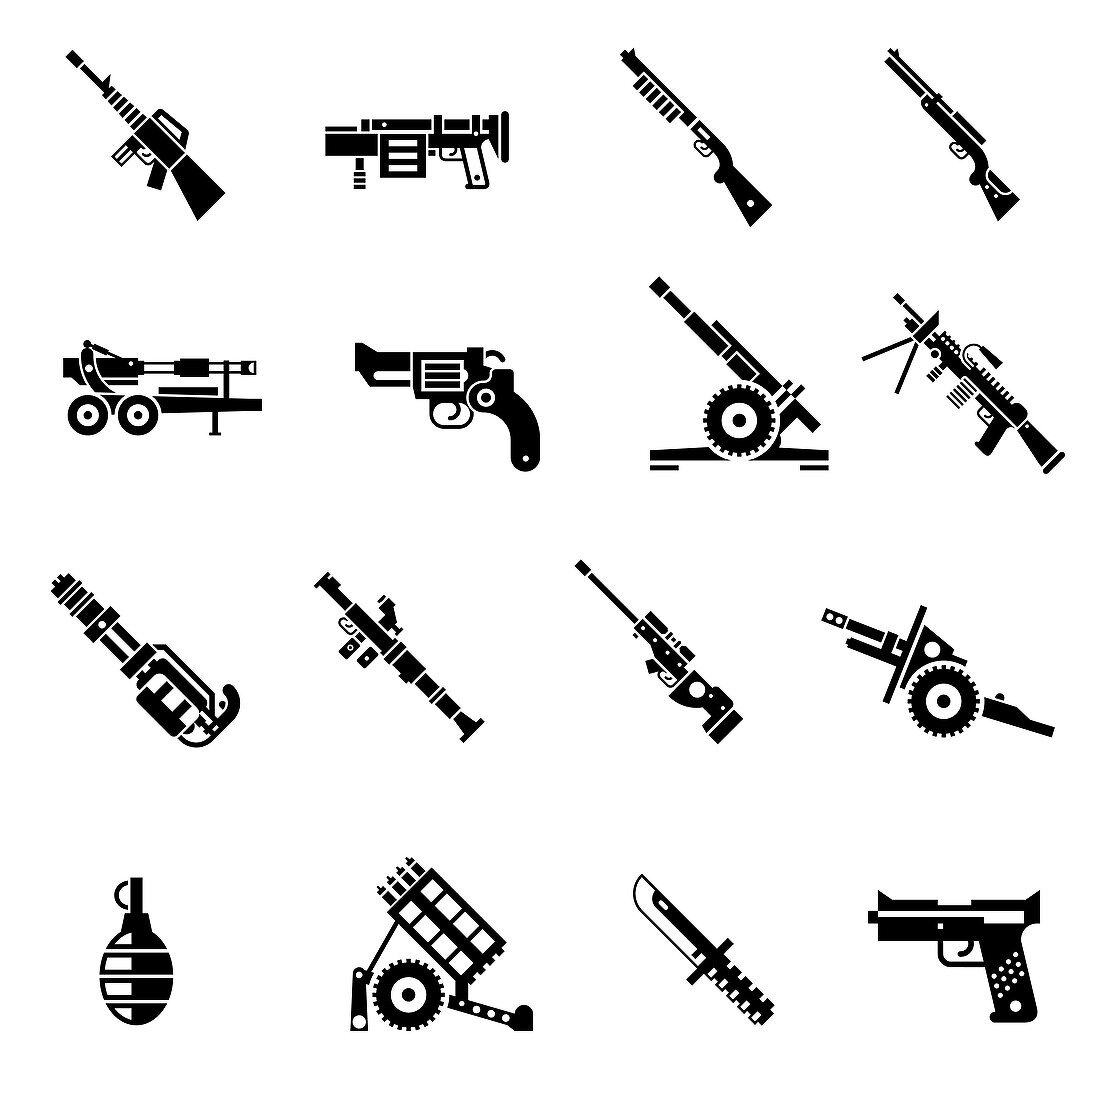 Weapon icons, illustration